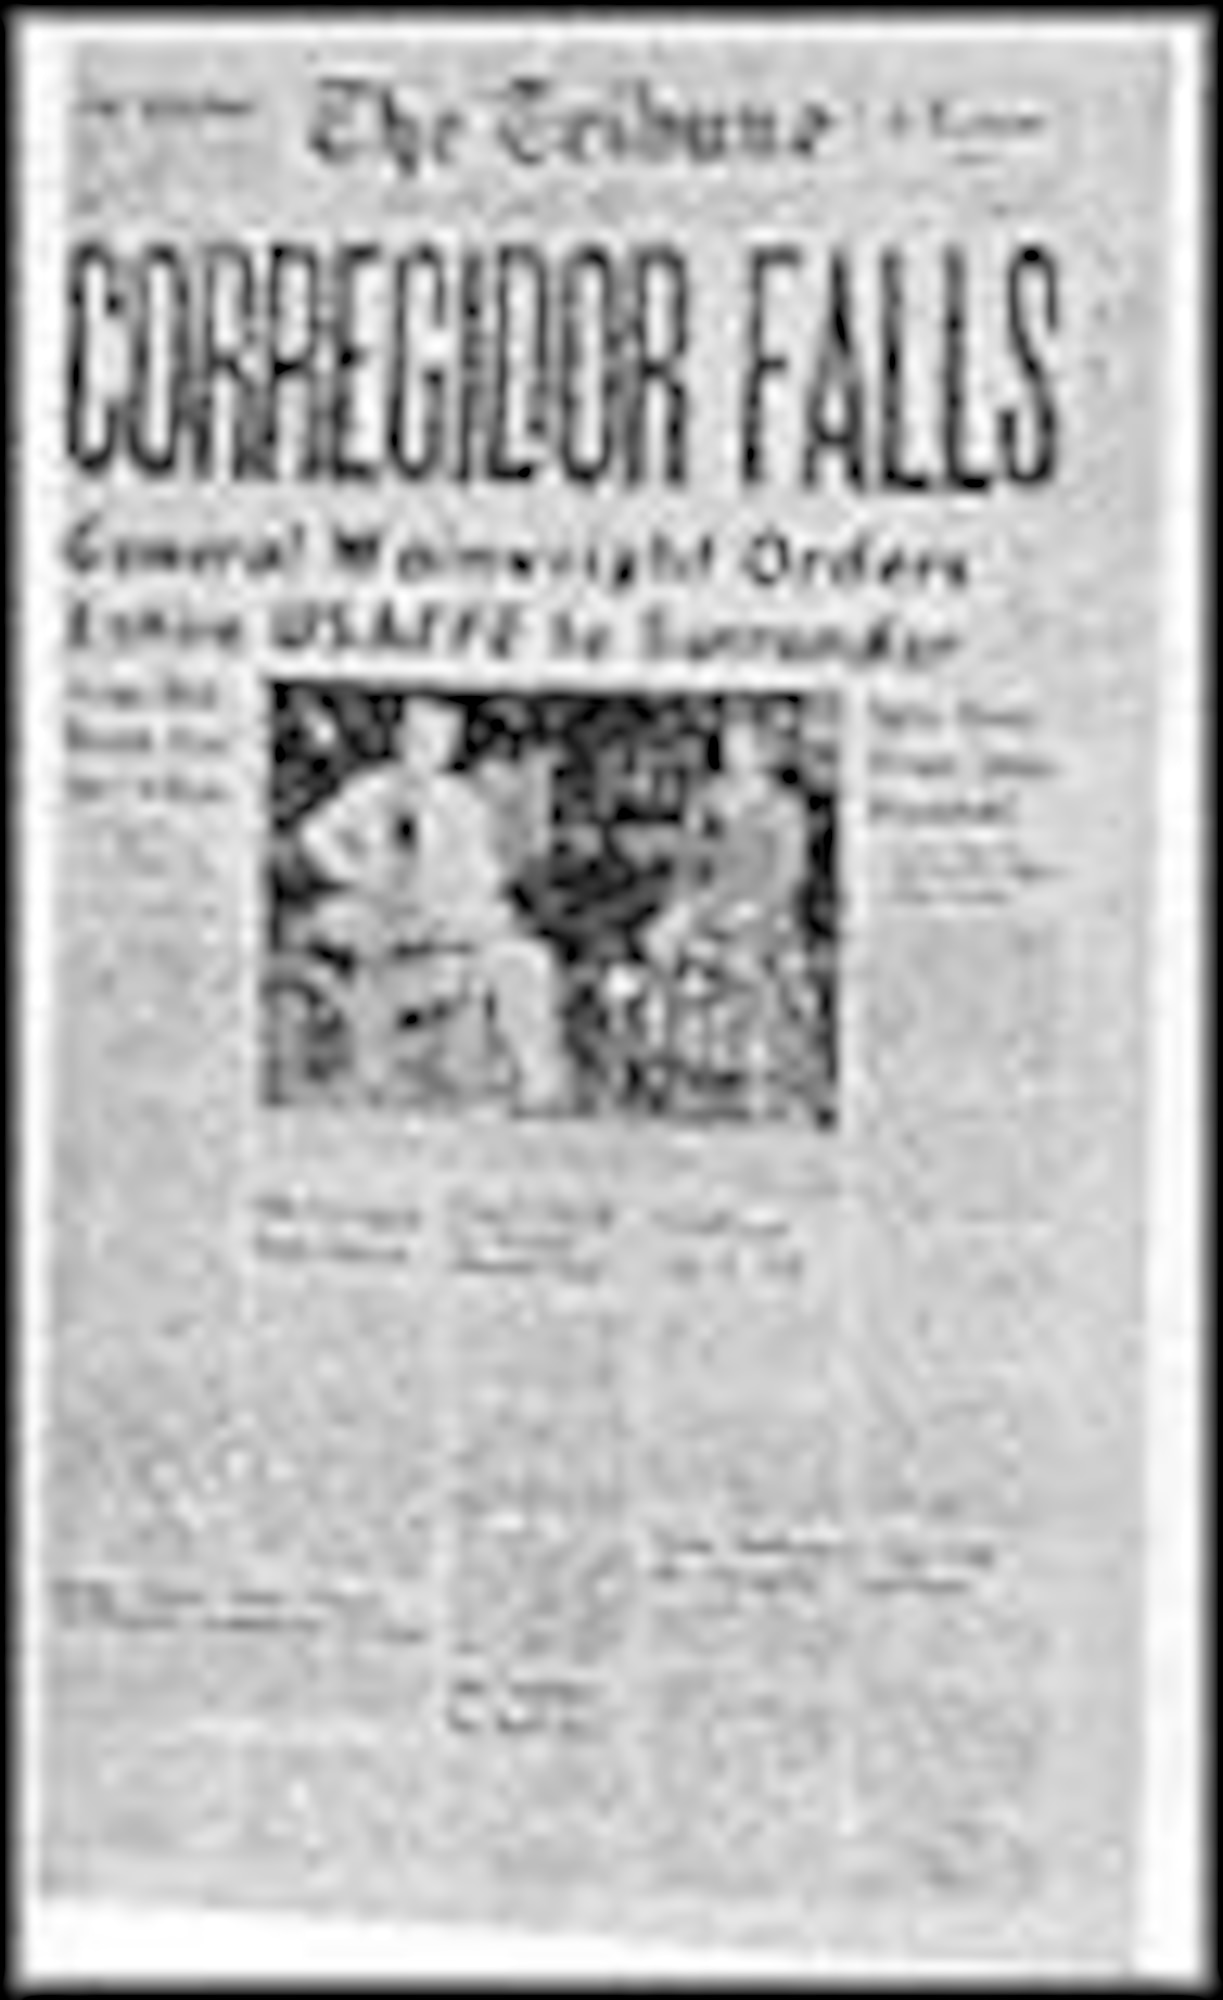 The Tribune headline reads "Corregidor Falls." (U.S. Air Force photo)